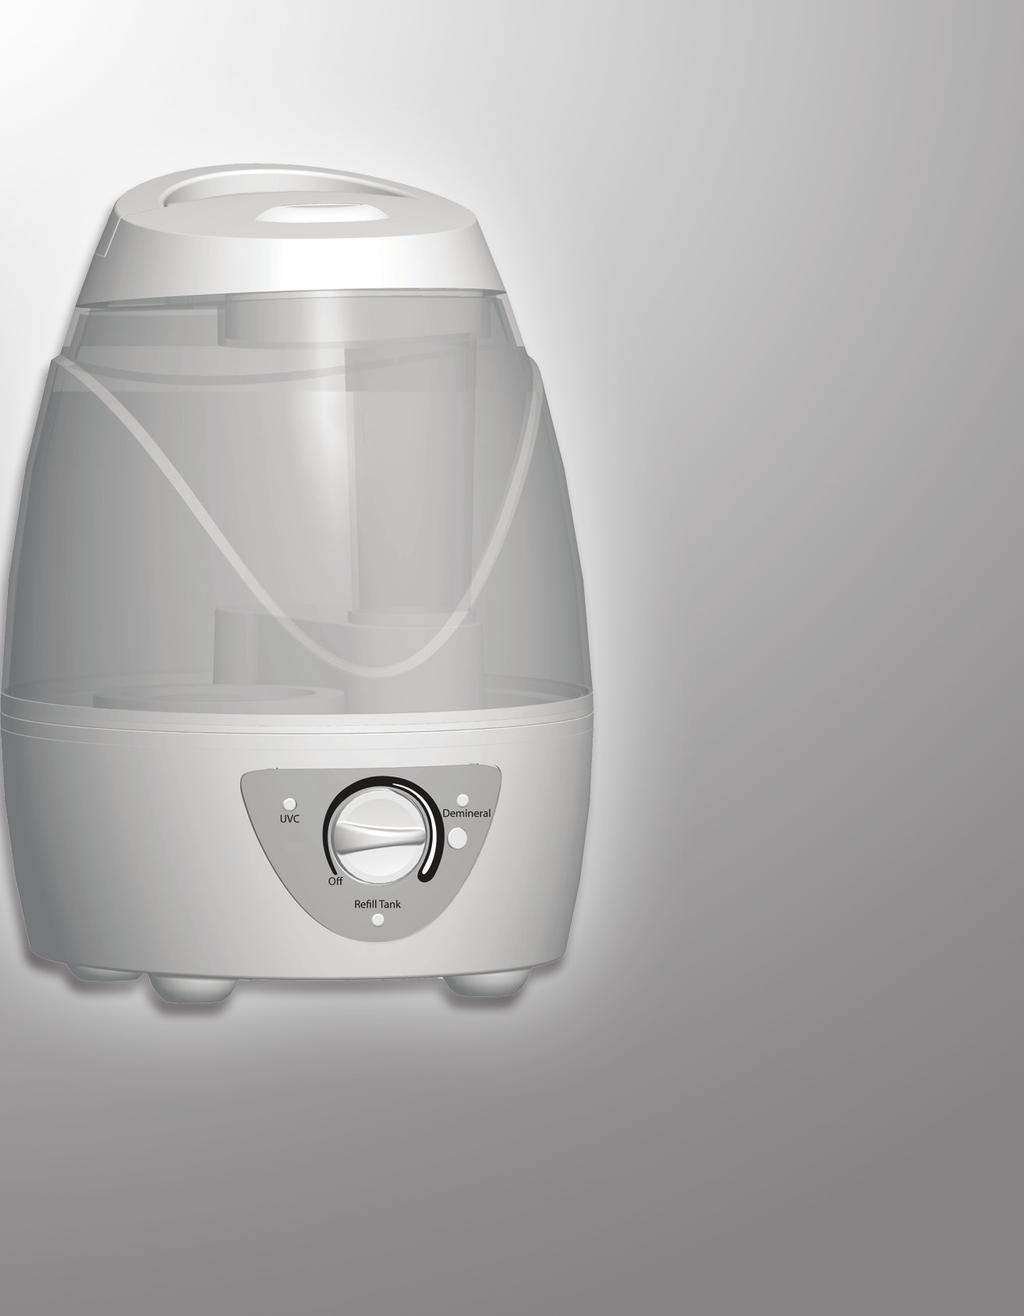 Ultrasonic Humidifier